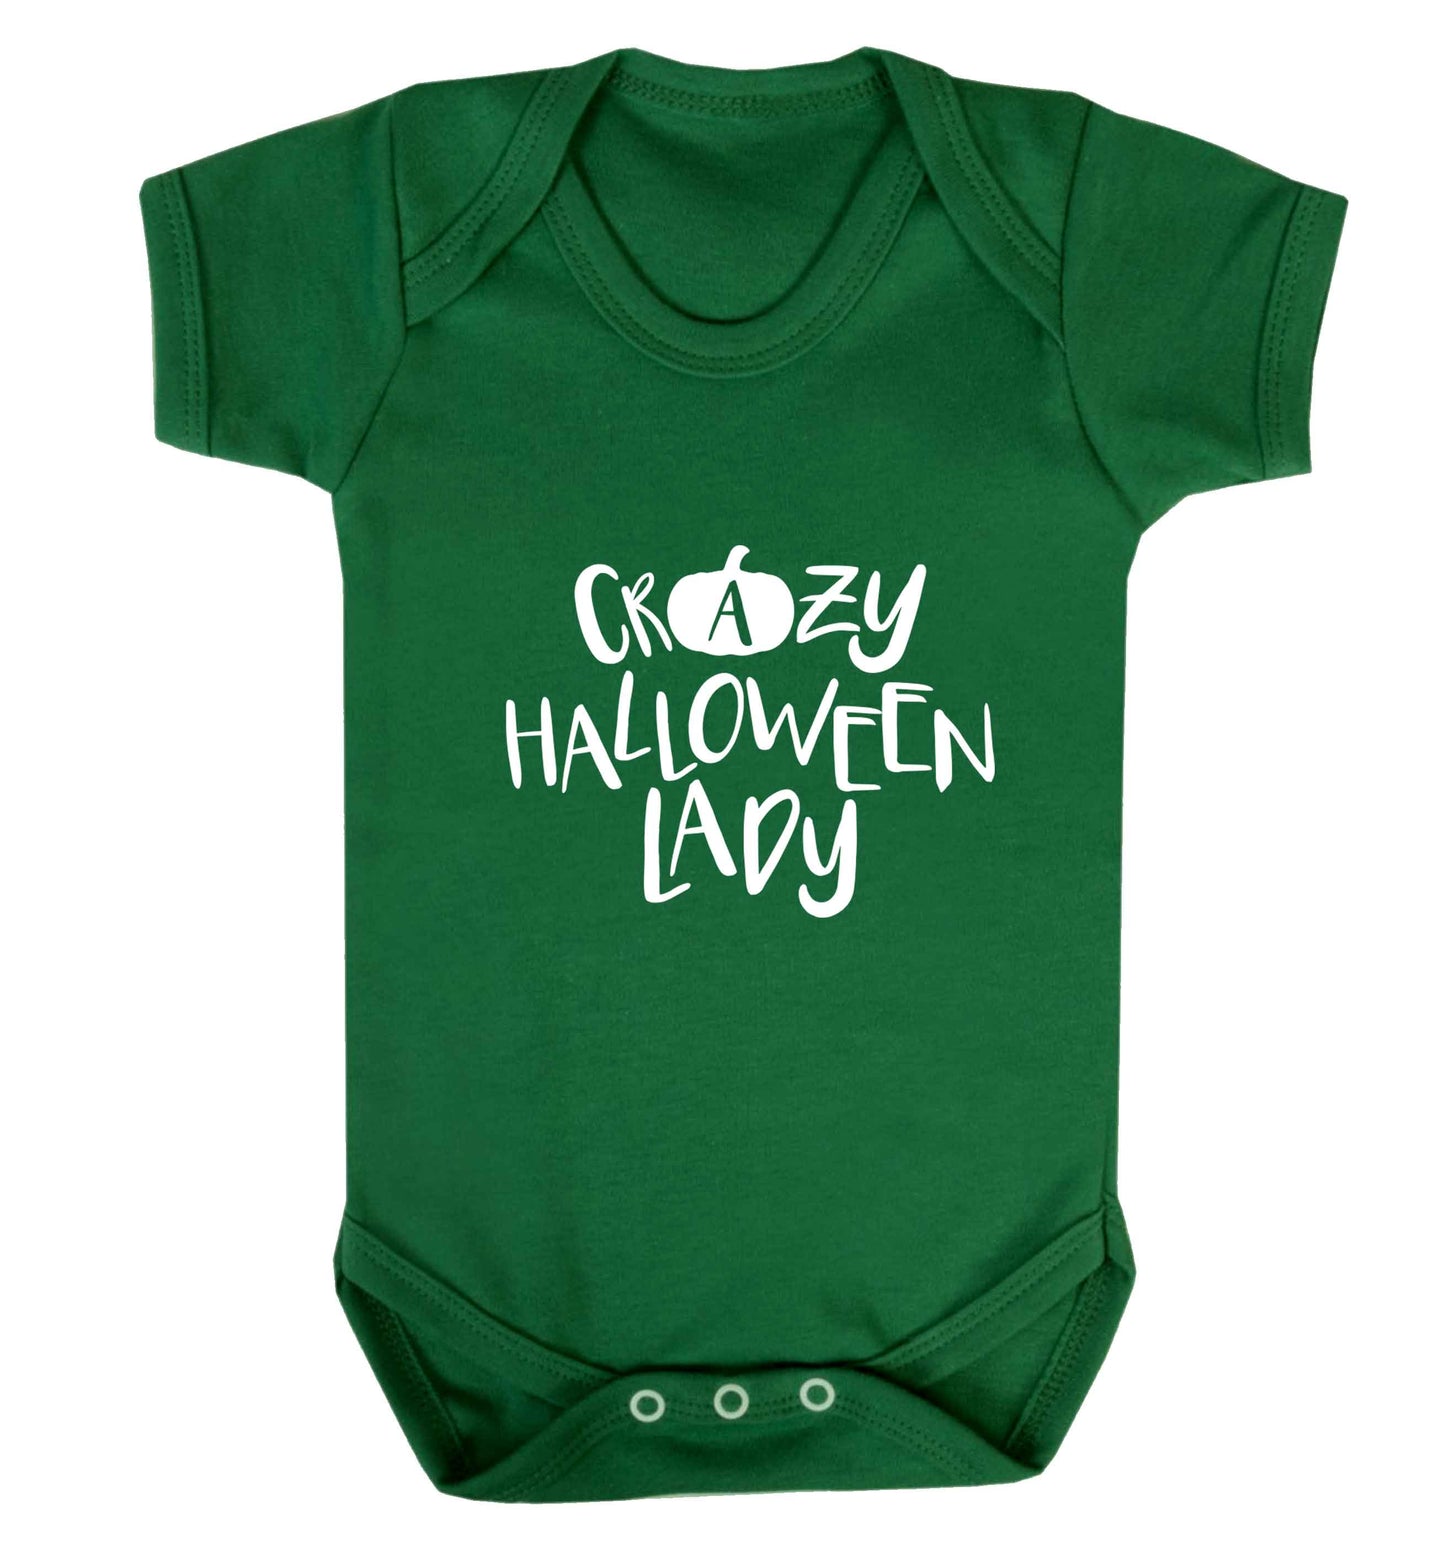 Crazy halloween lady baby vest green 18-24 months